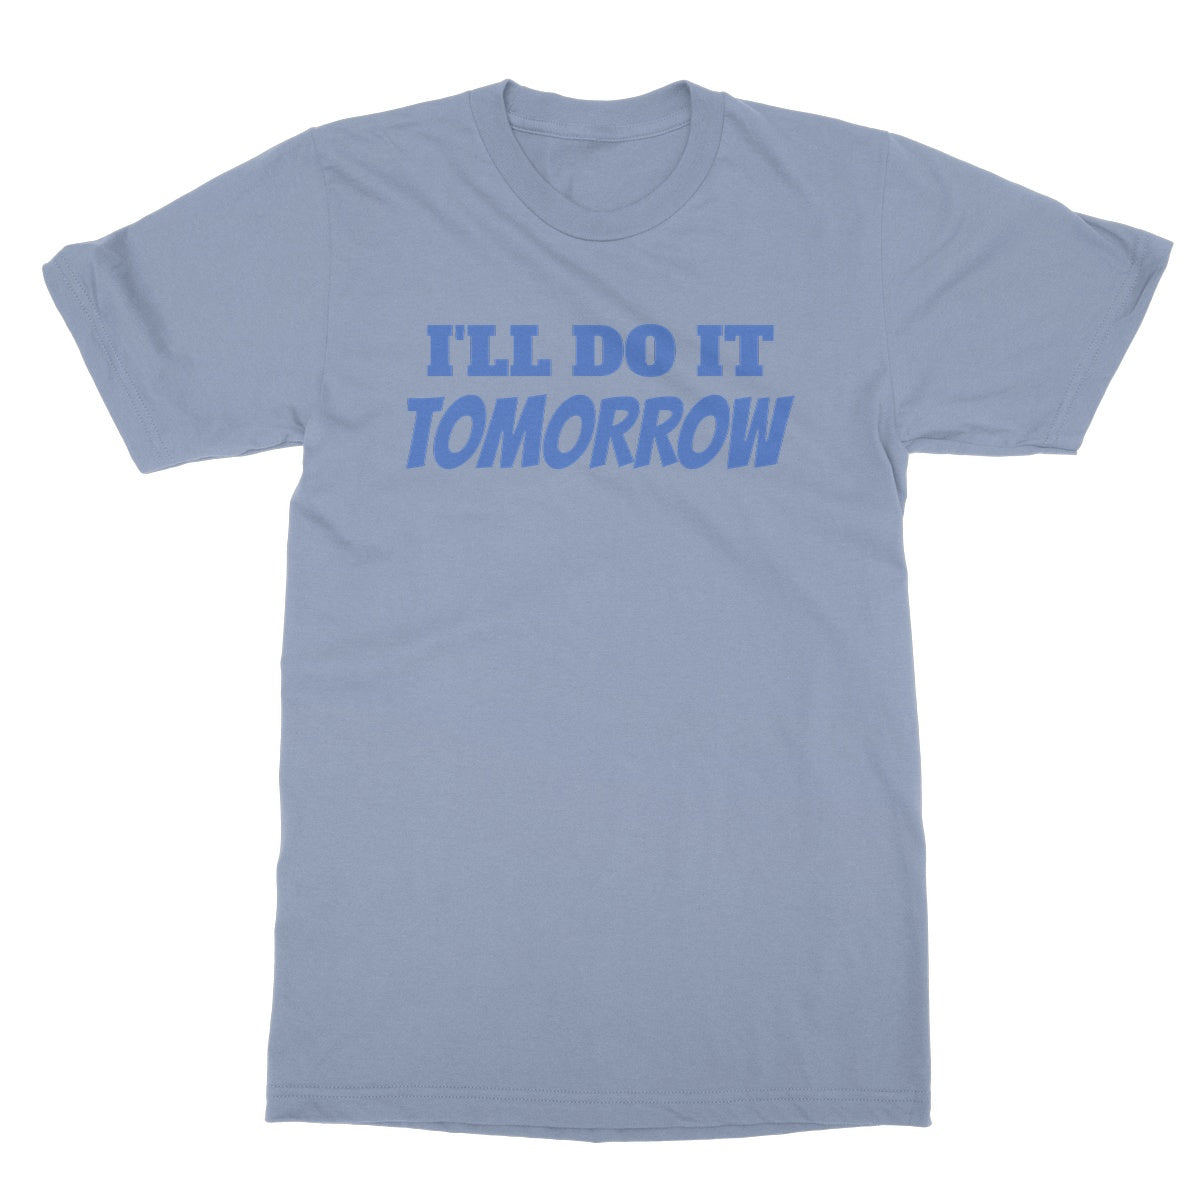 Ill do it tomorrow t shirt light blue